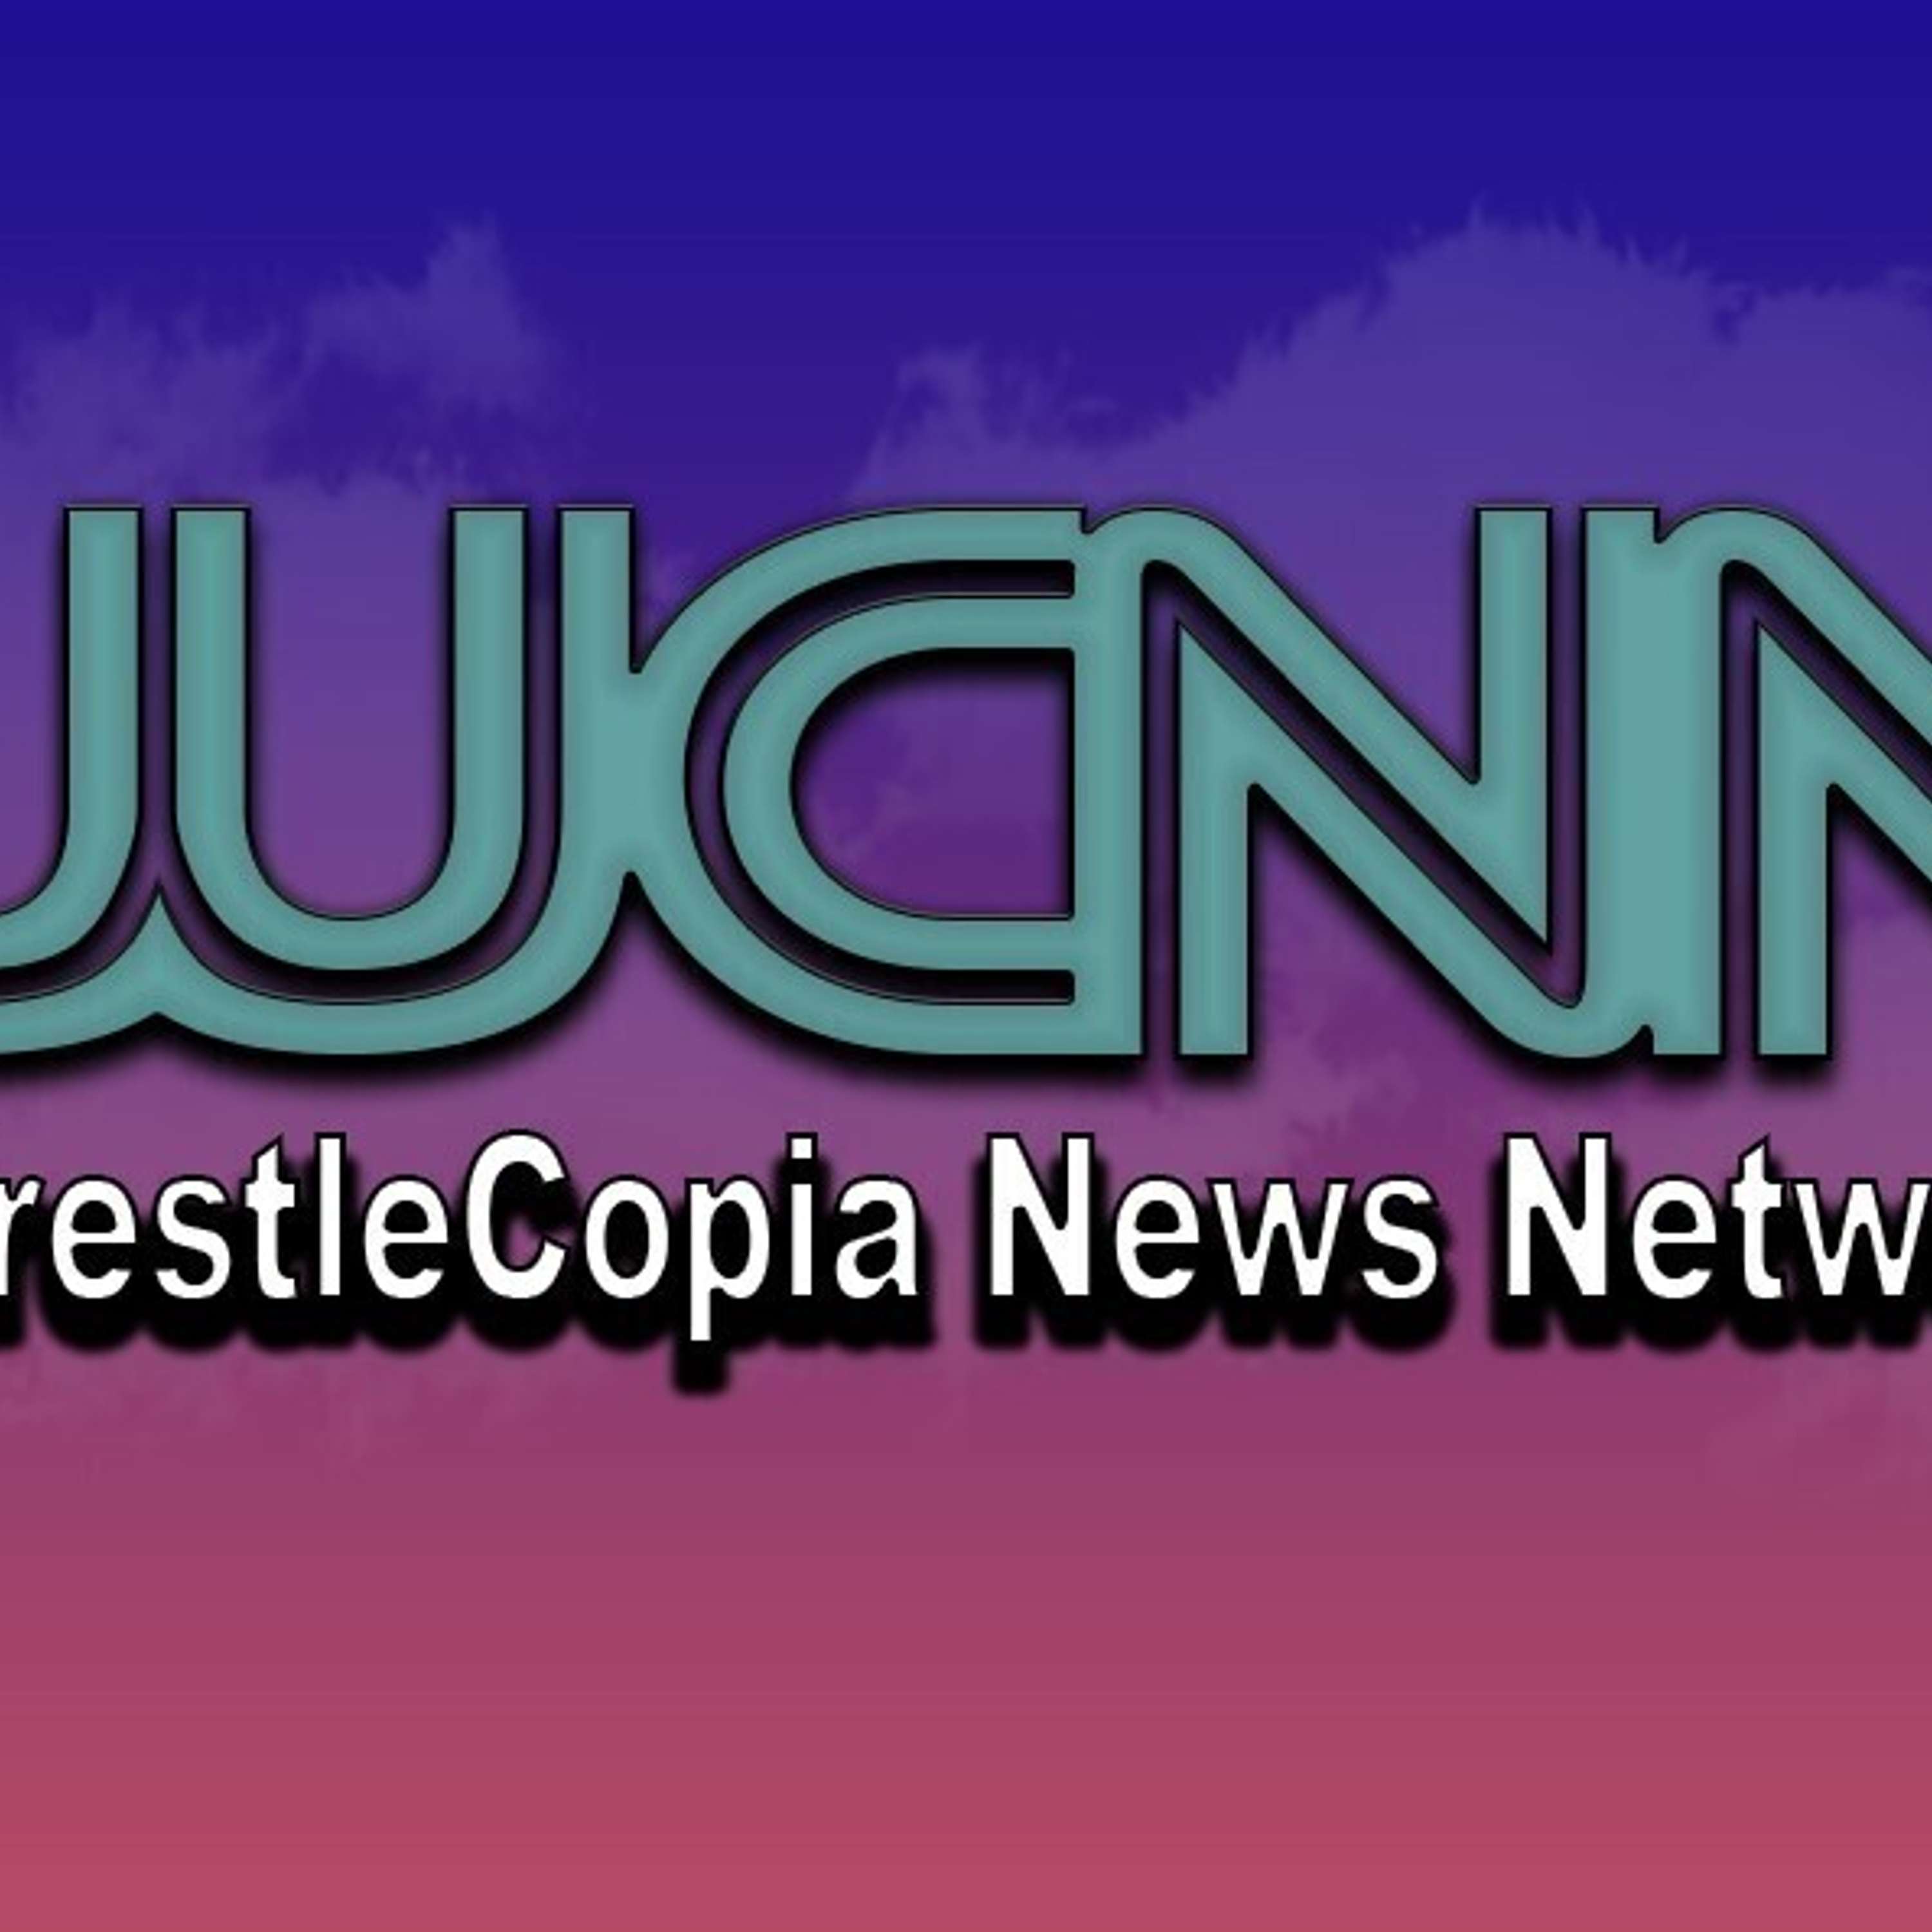 WrestleCopia News Network